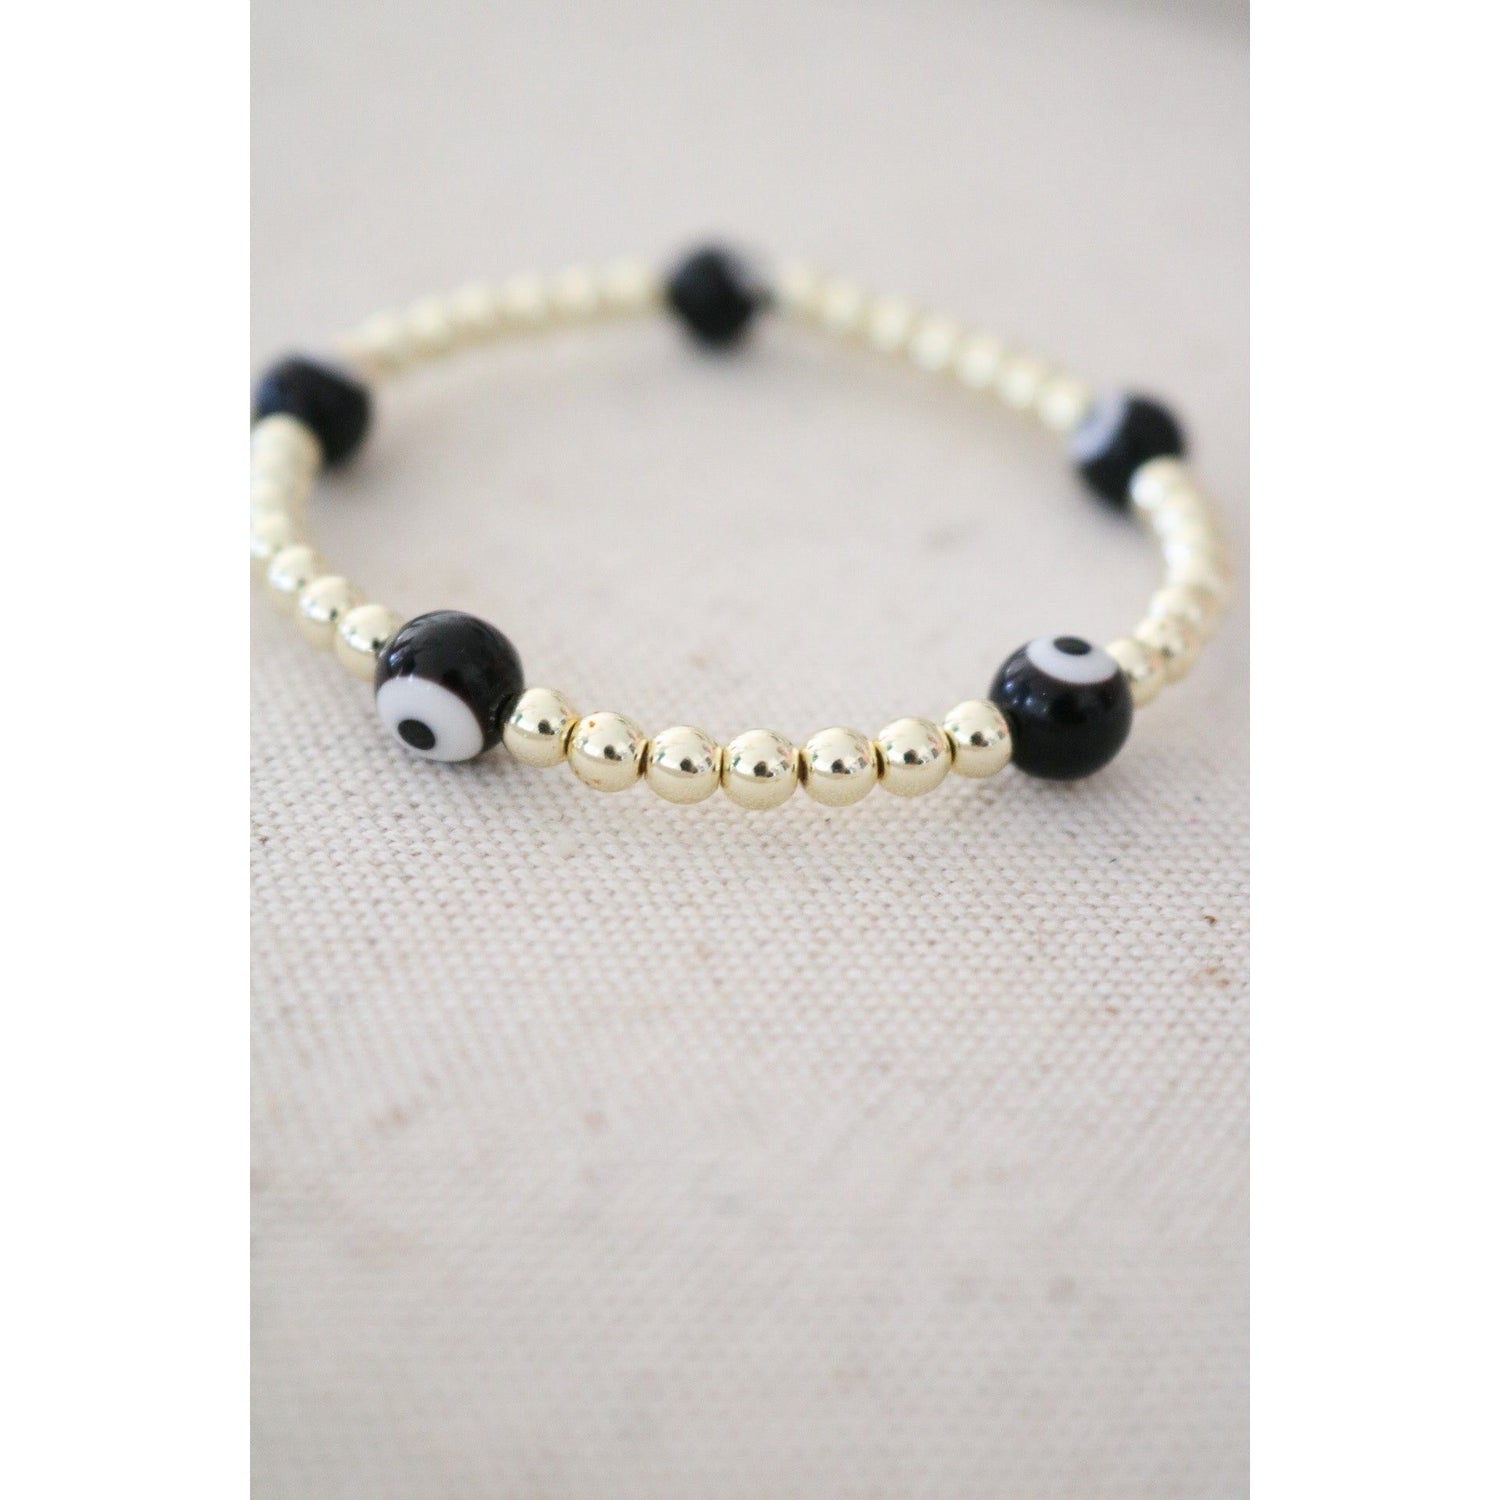 white and black evil eye beads on a gold hematite stretch bracelet